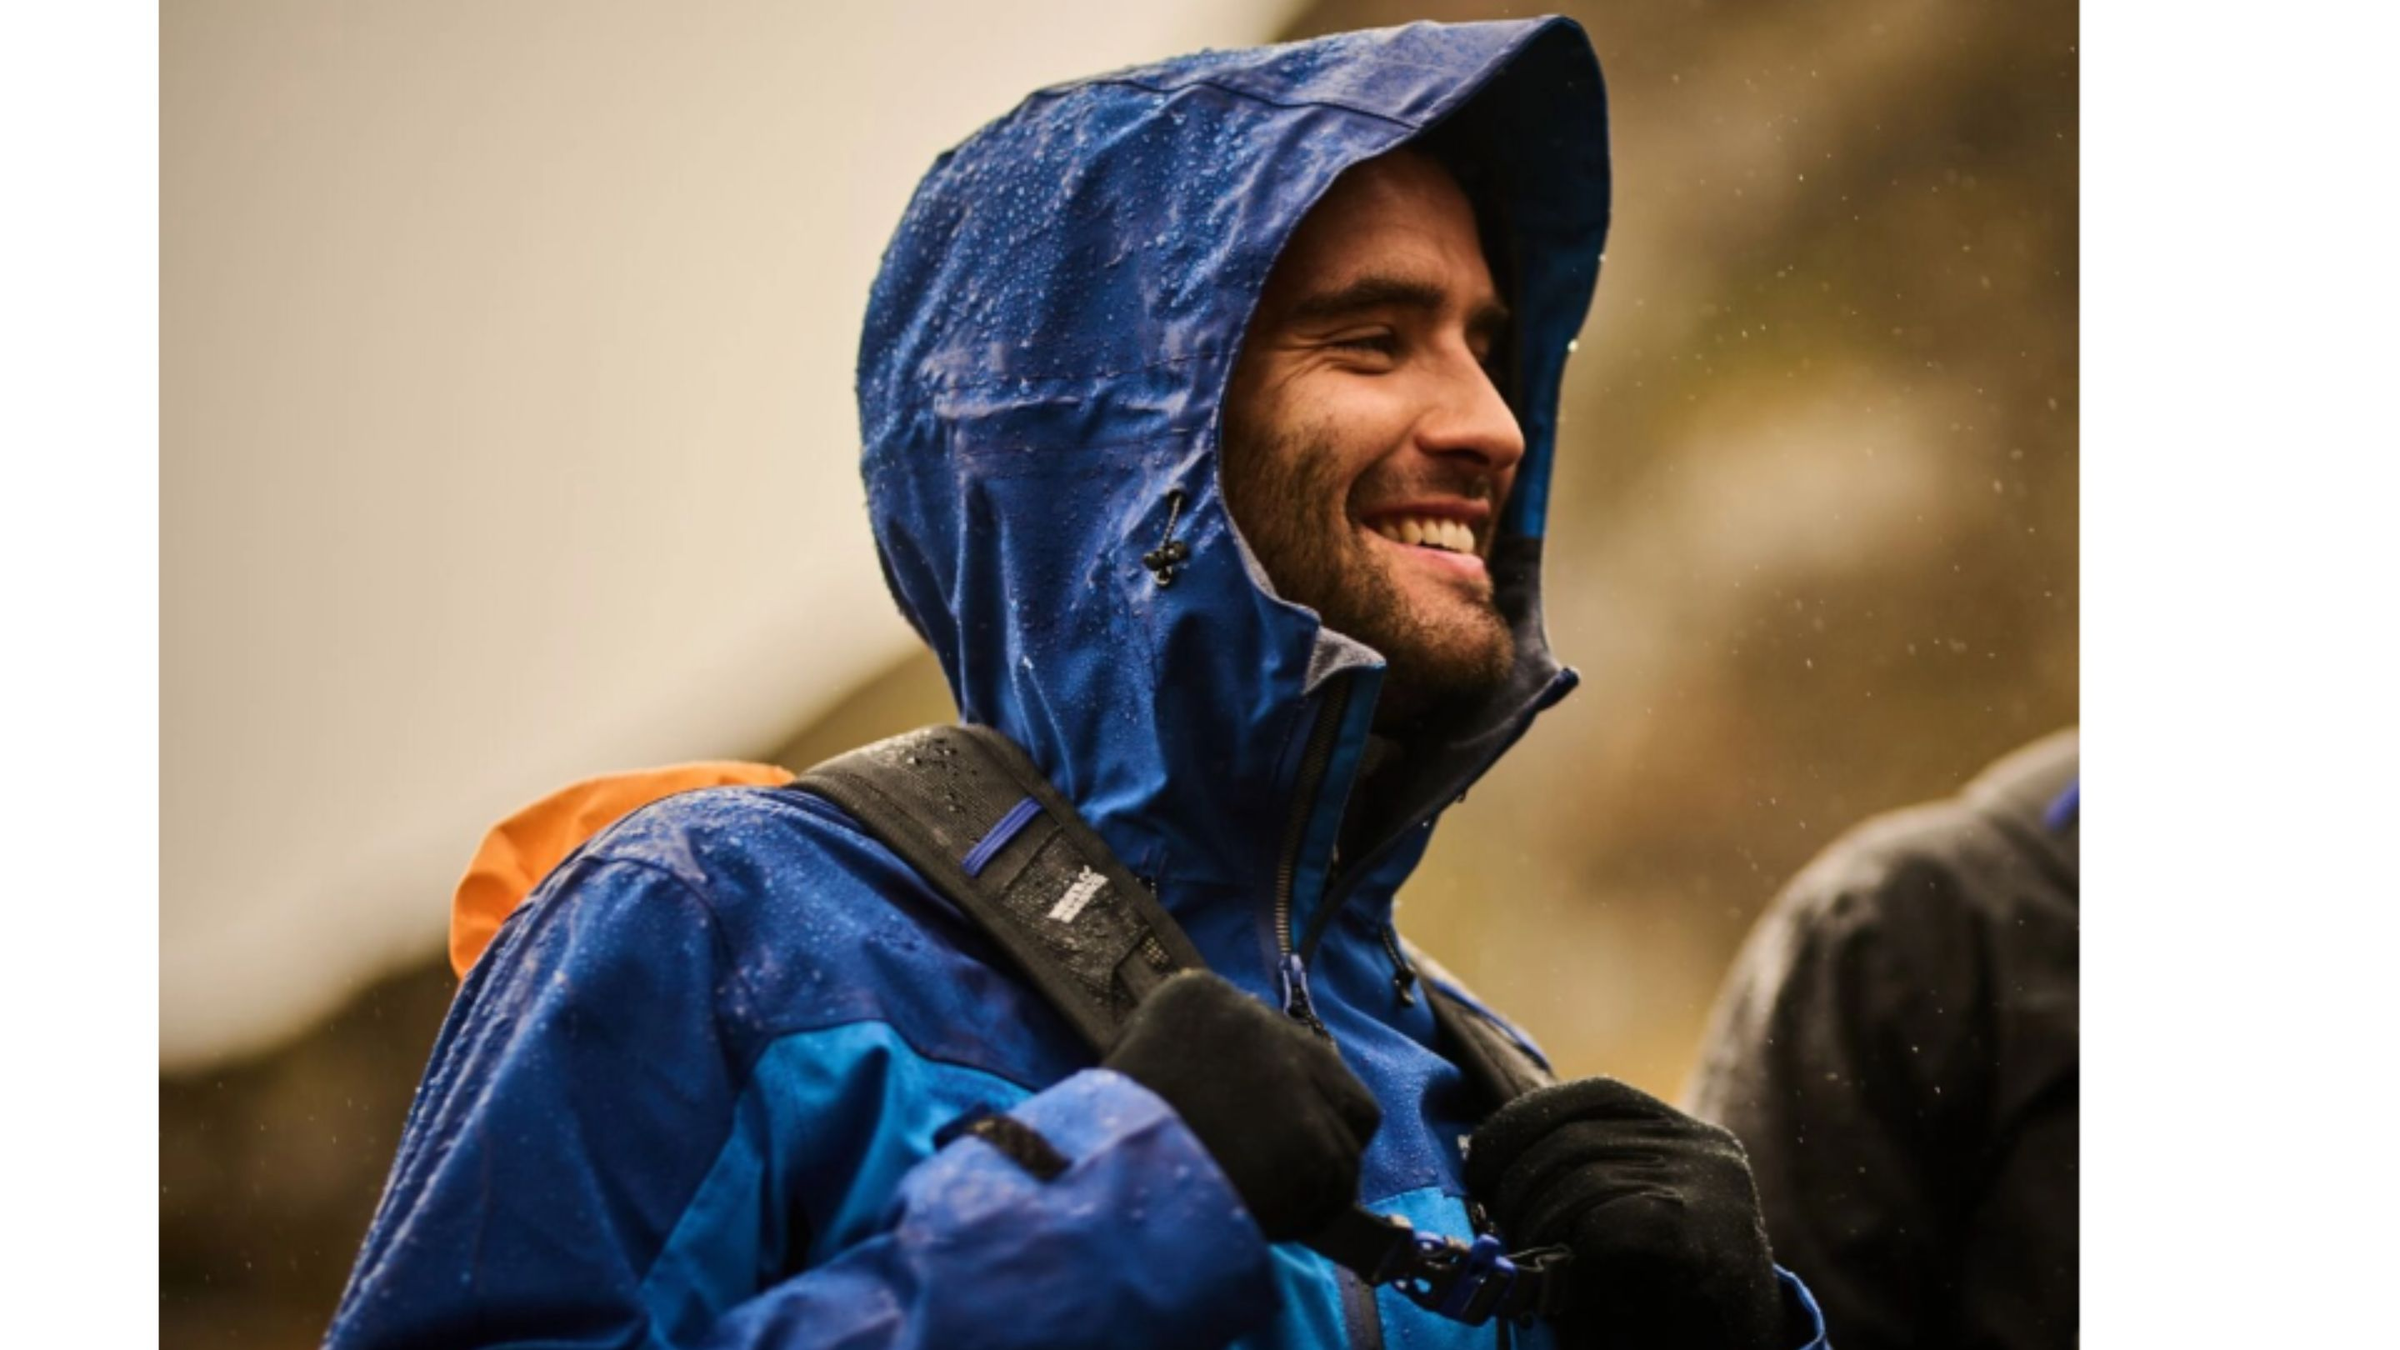  Springs Rain Suits for Women Waterproof Reflective